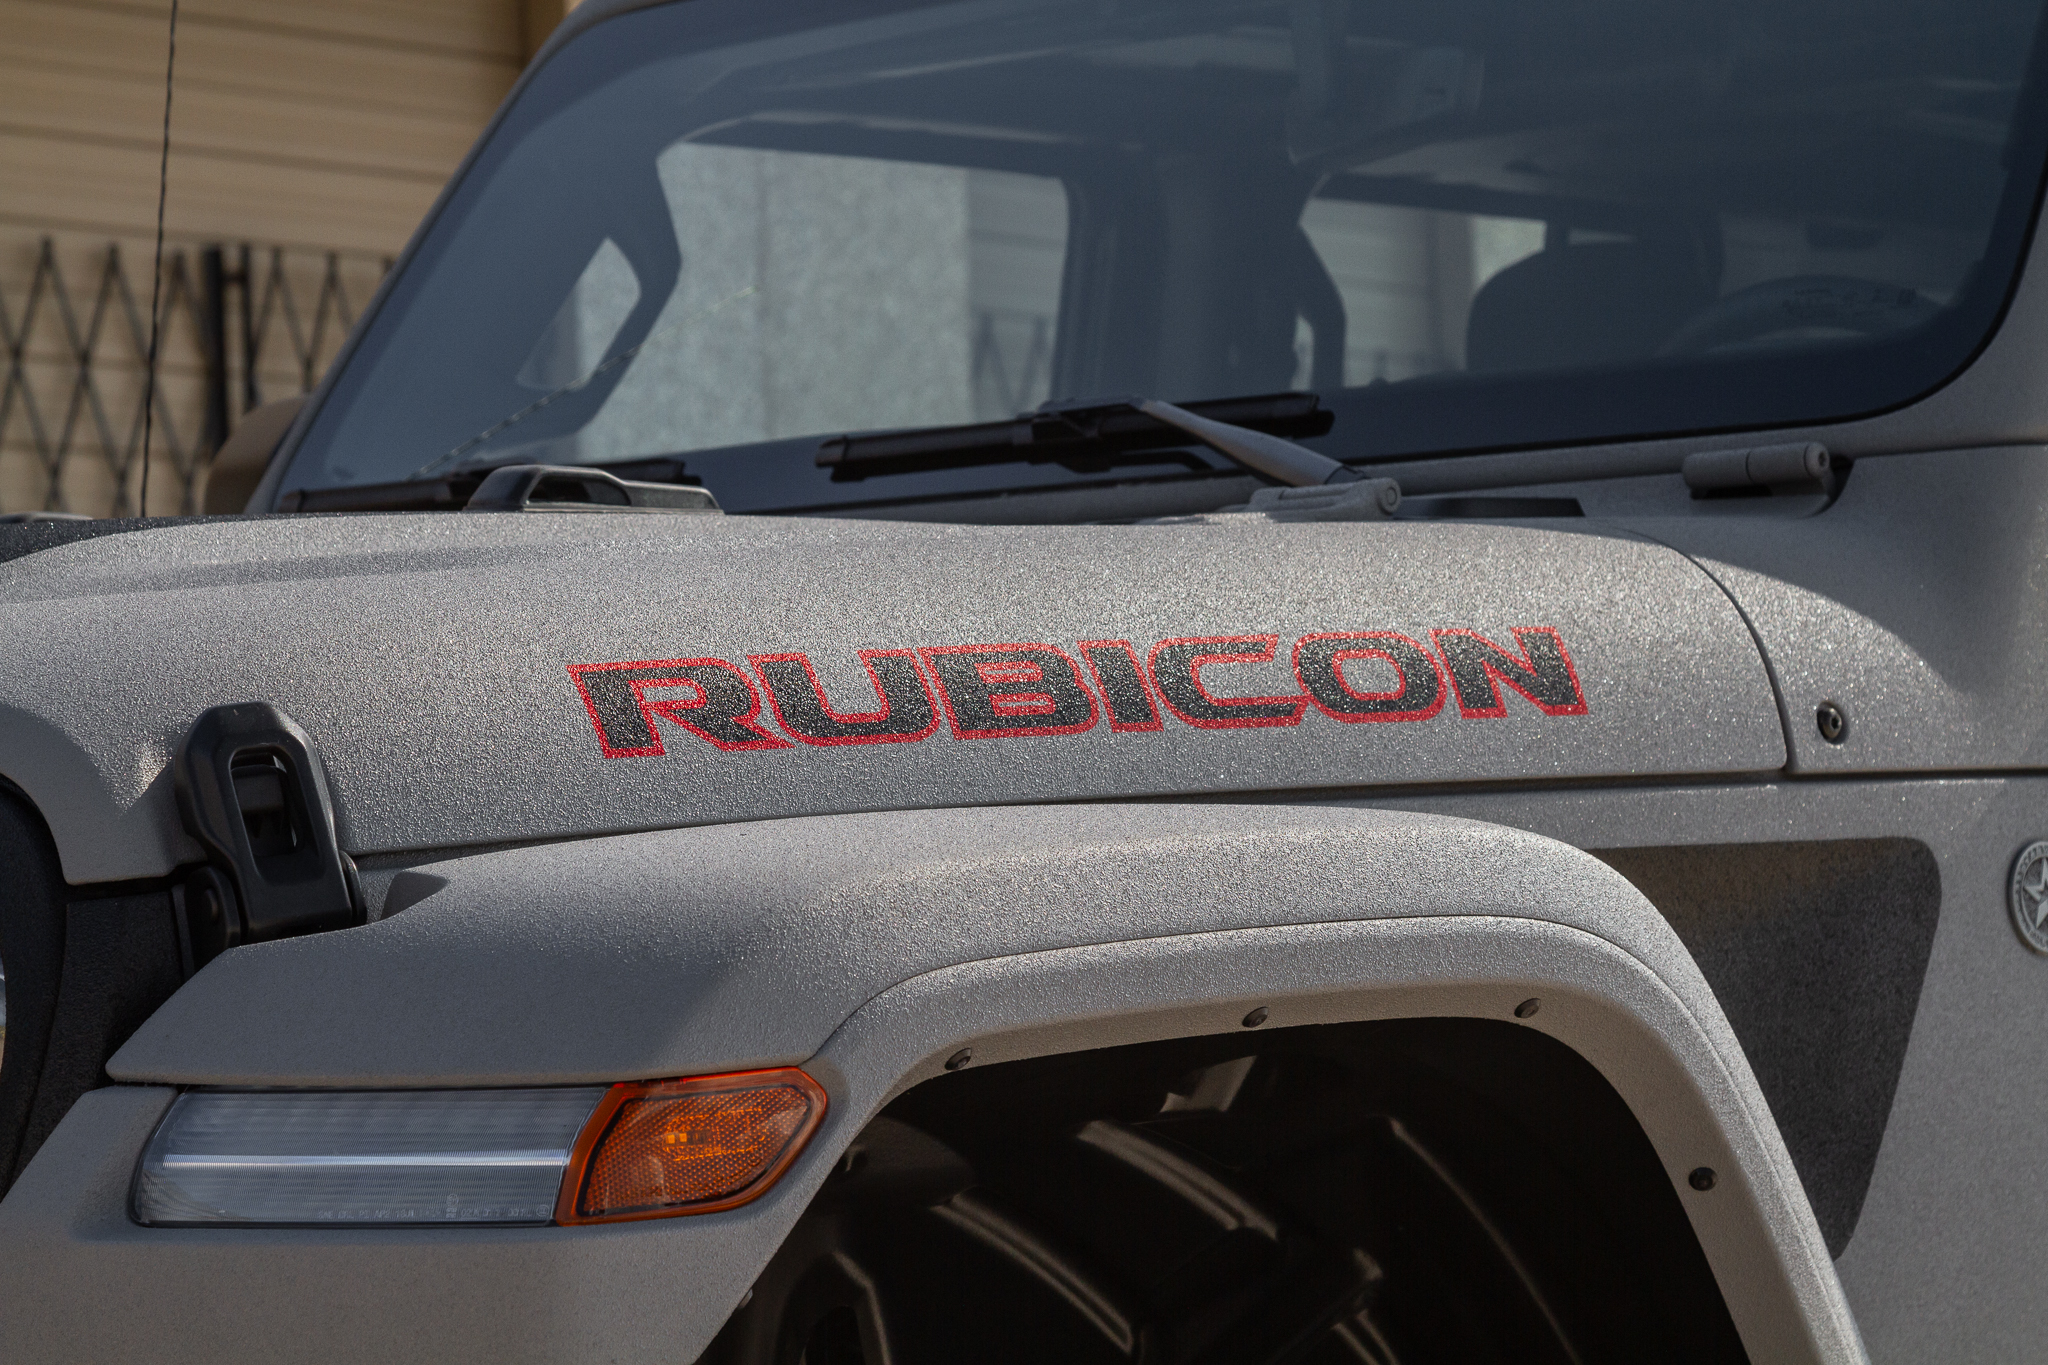 New 2021 Jeep Wrangler Rubicon Adventure Series